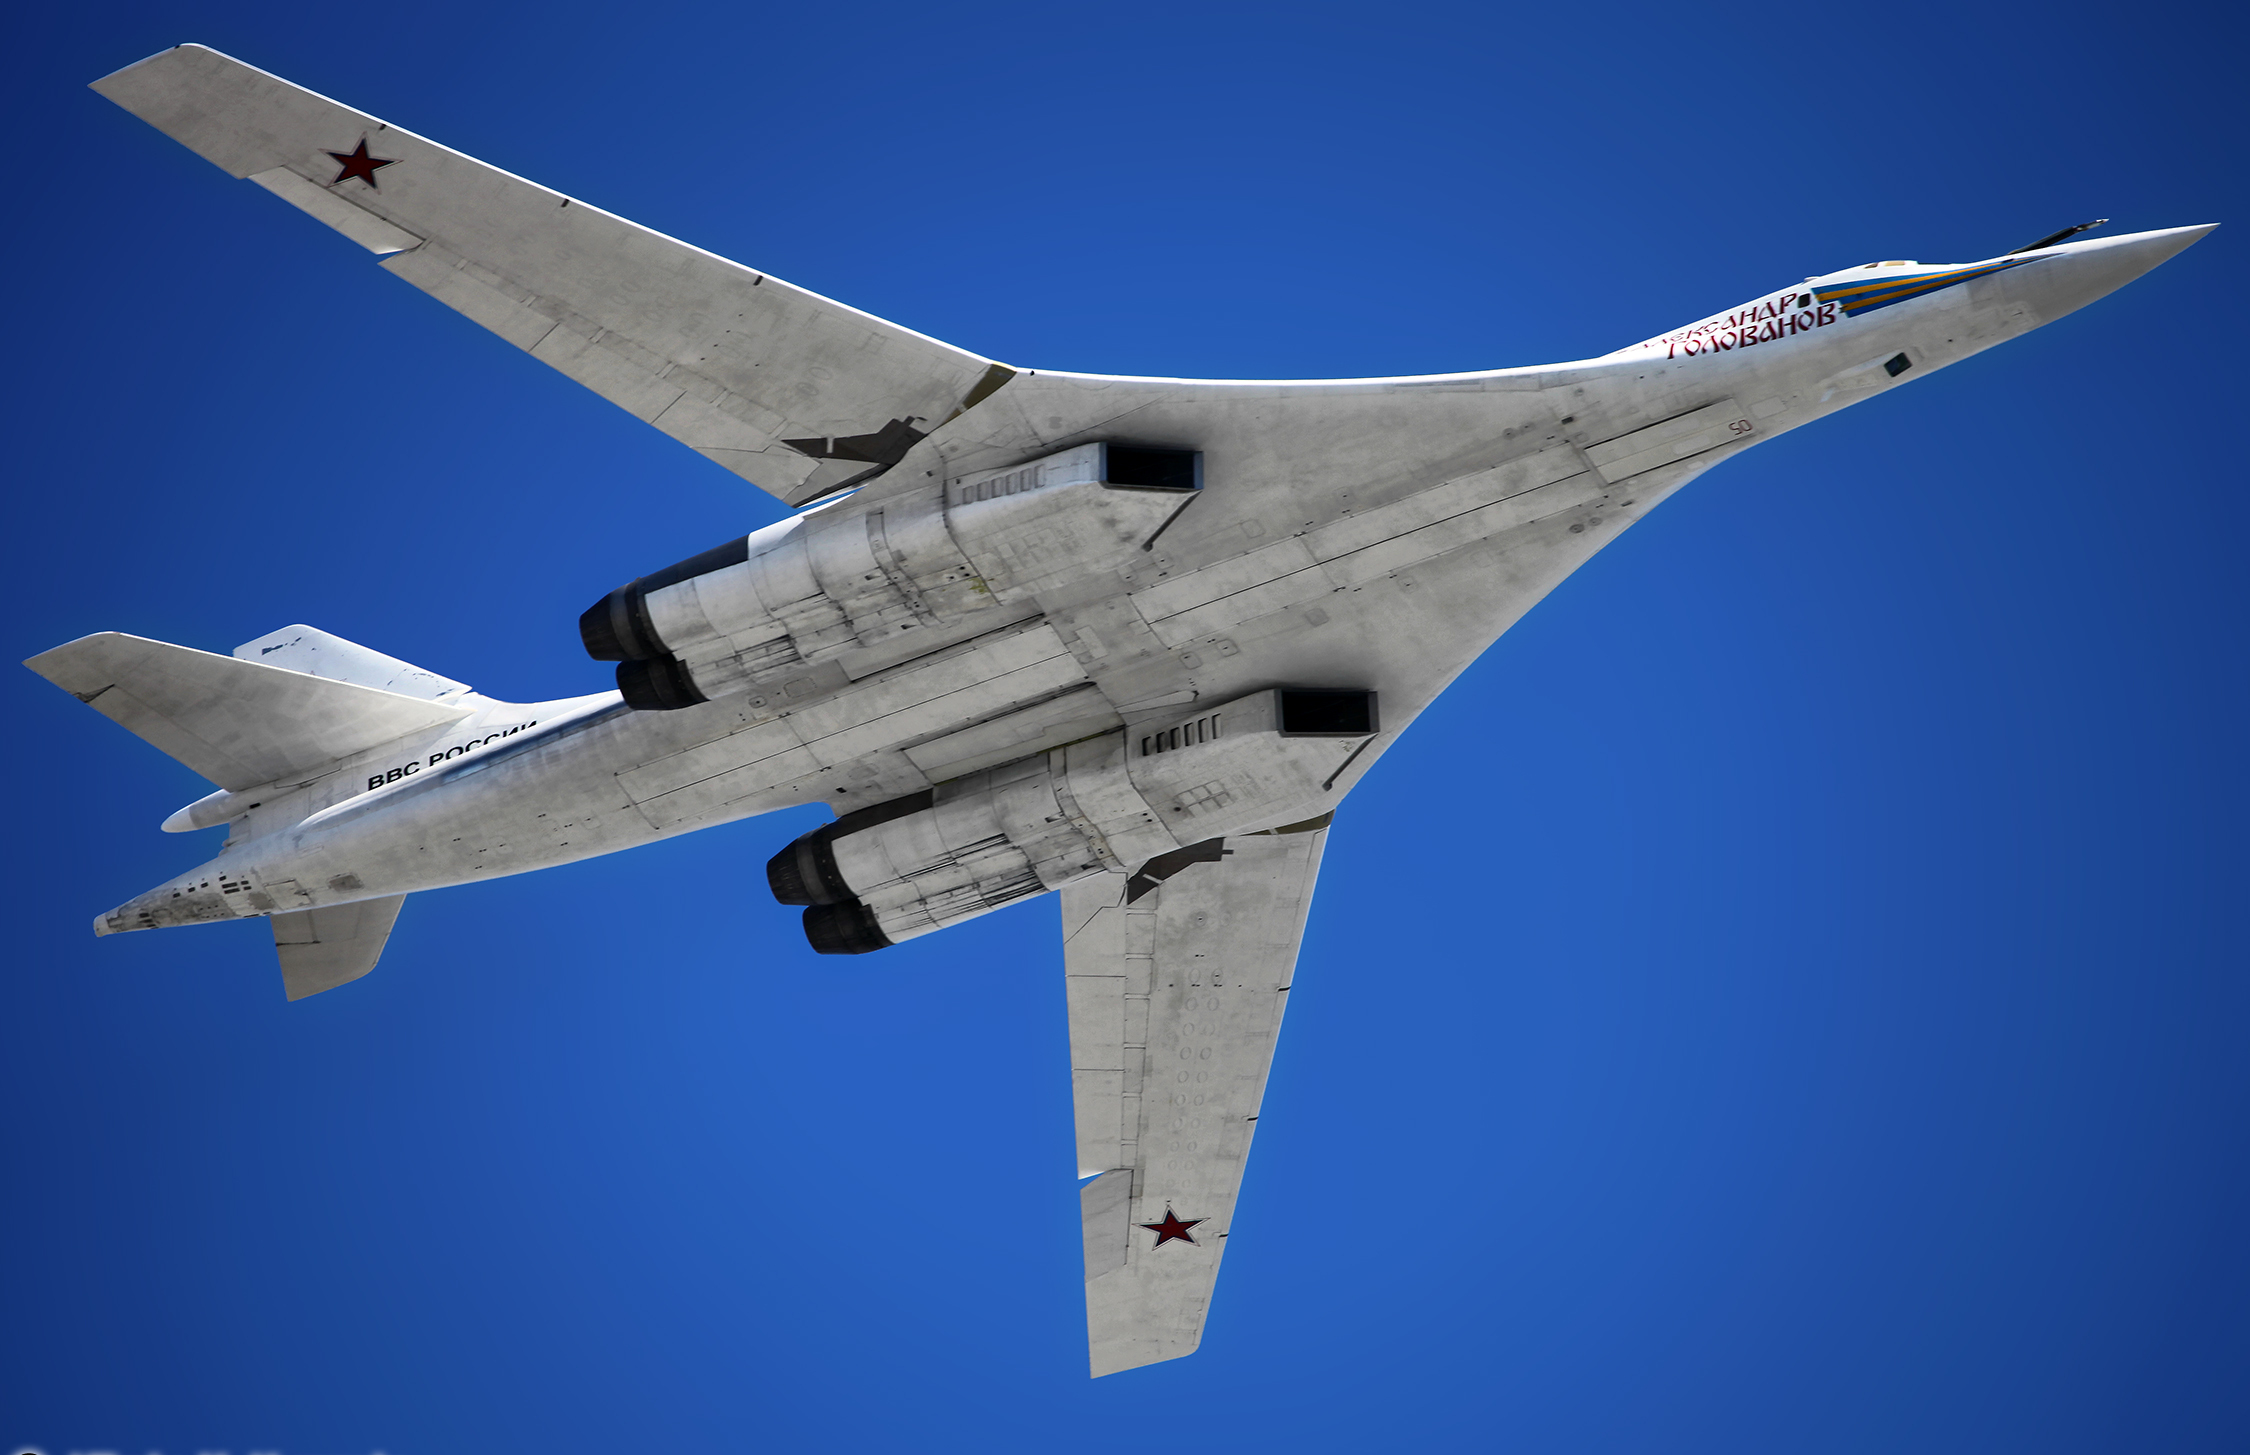 The underside of the Tu-160.